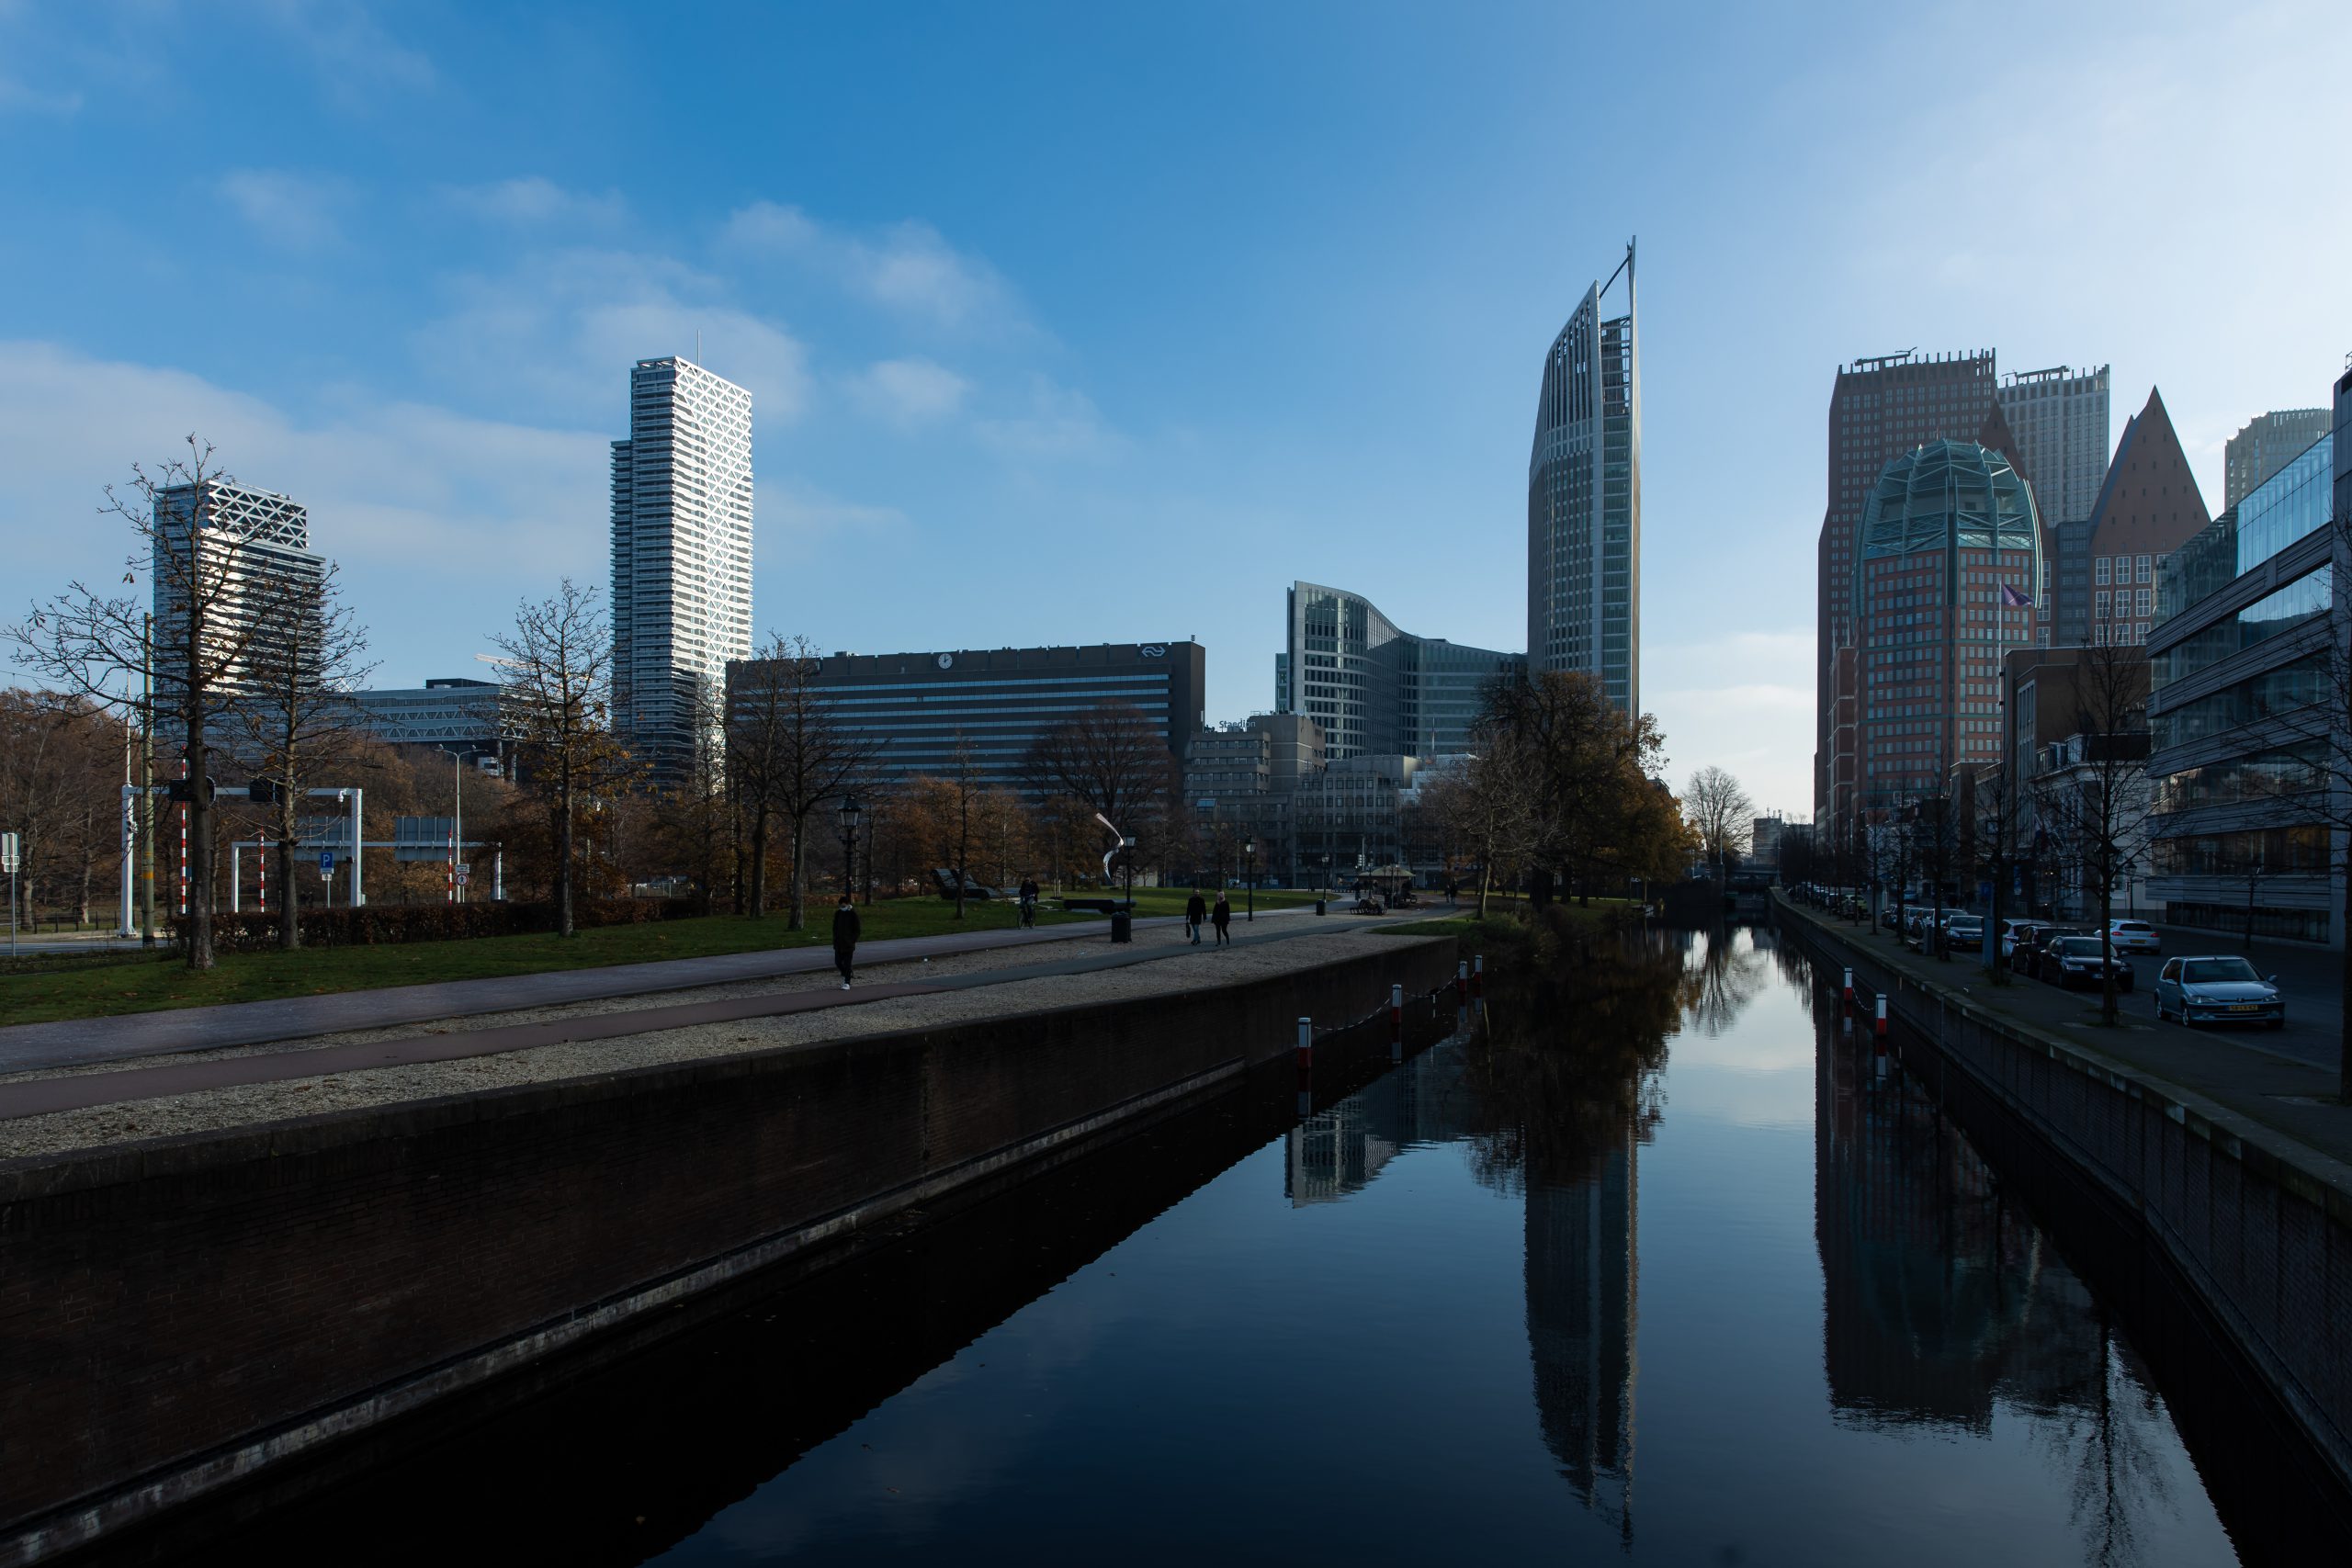 Den Haag skyline